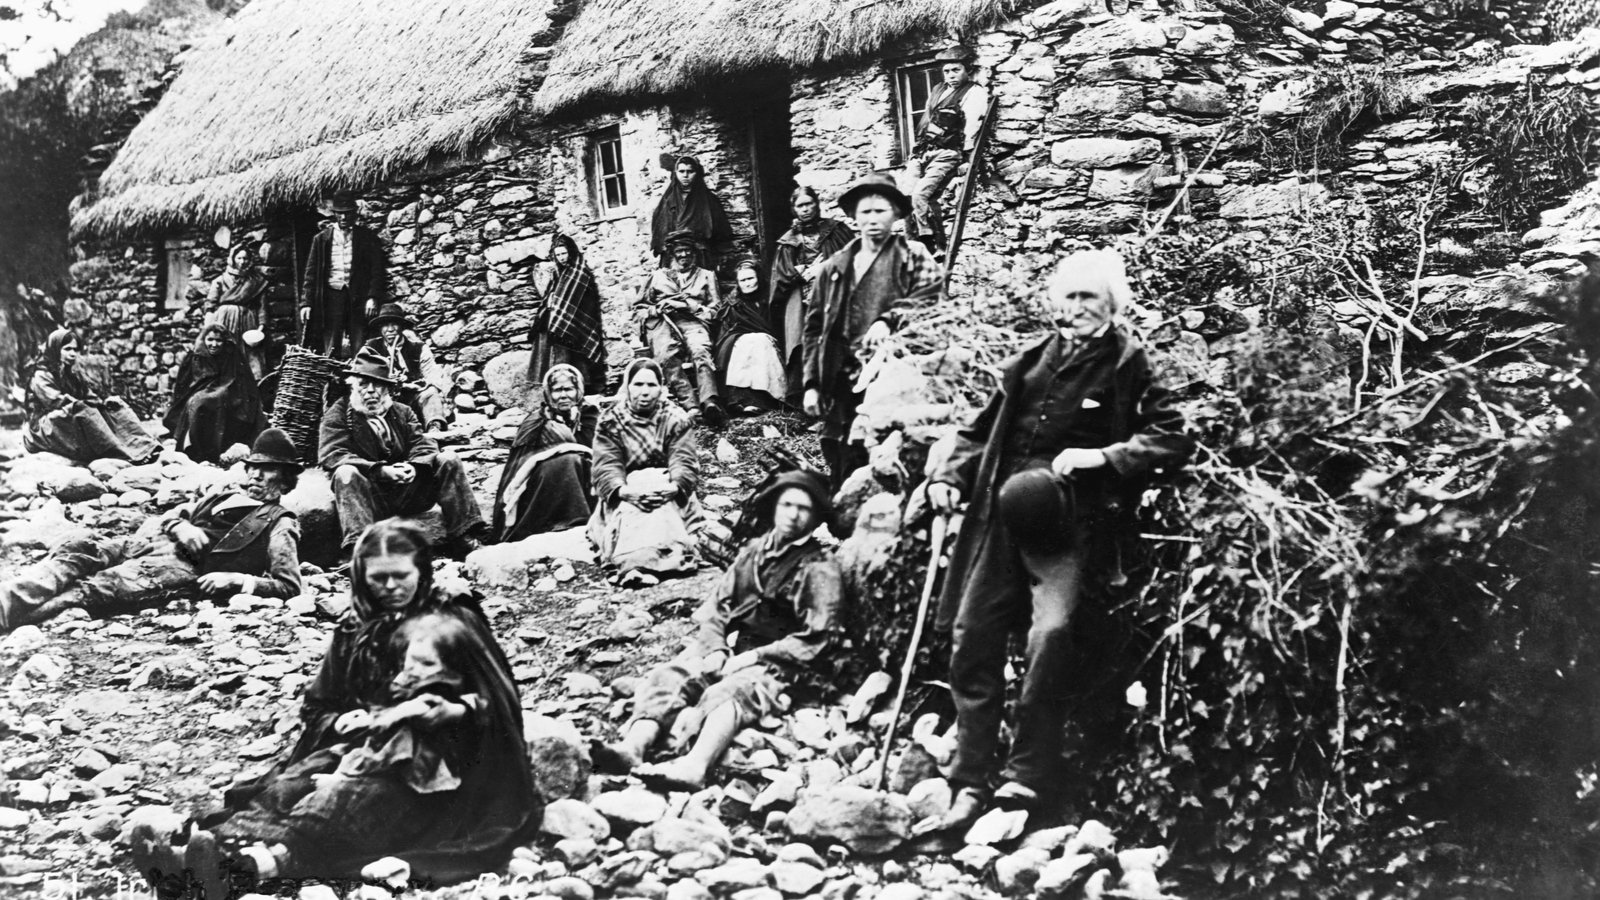 irish potato famine photographs